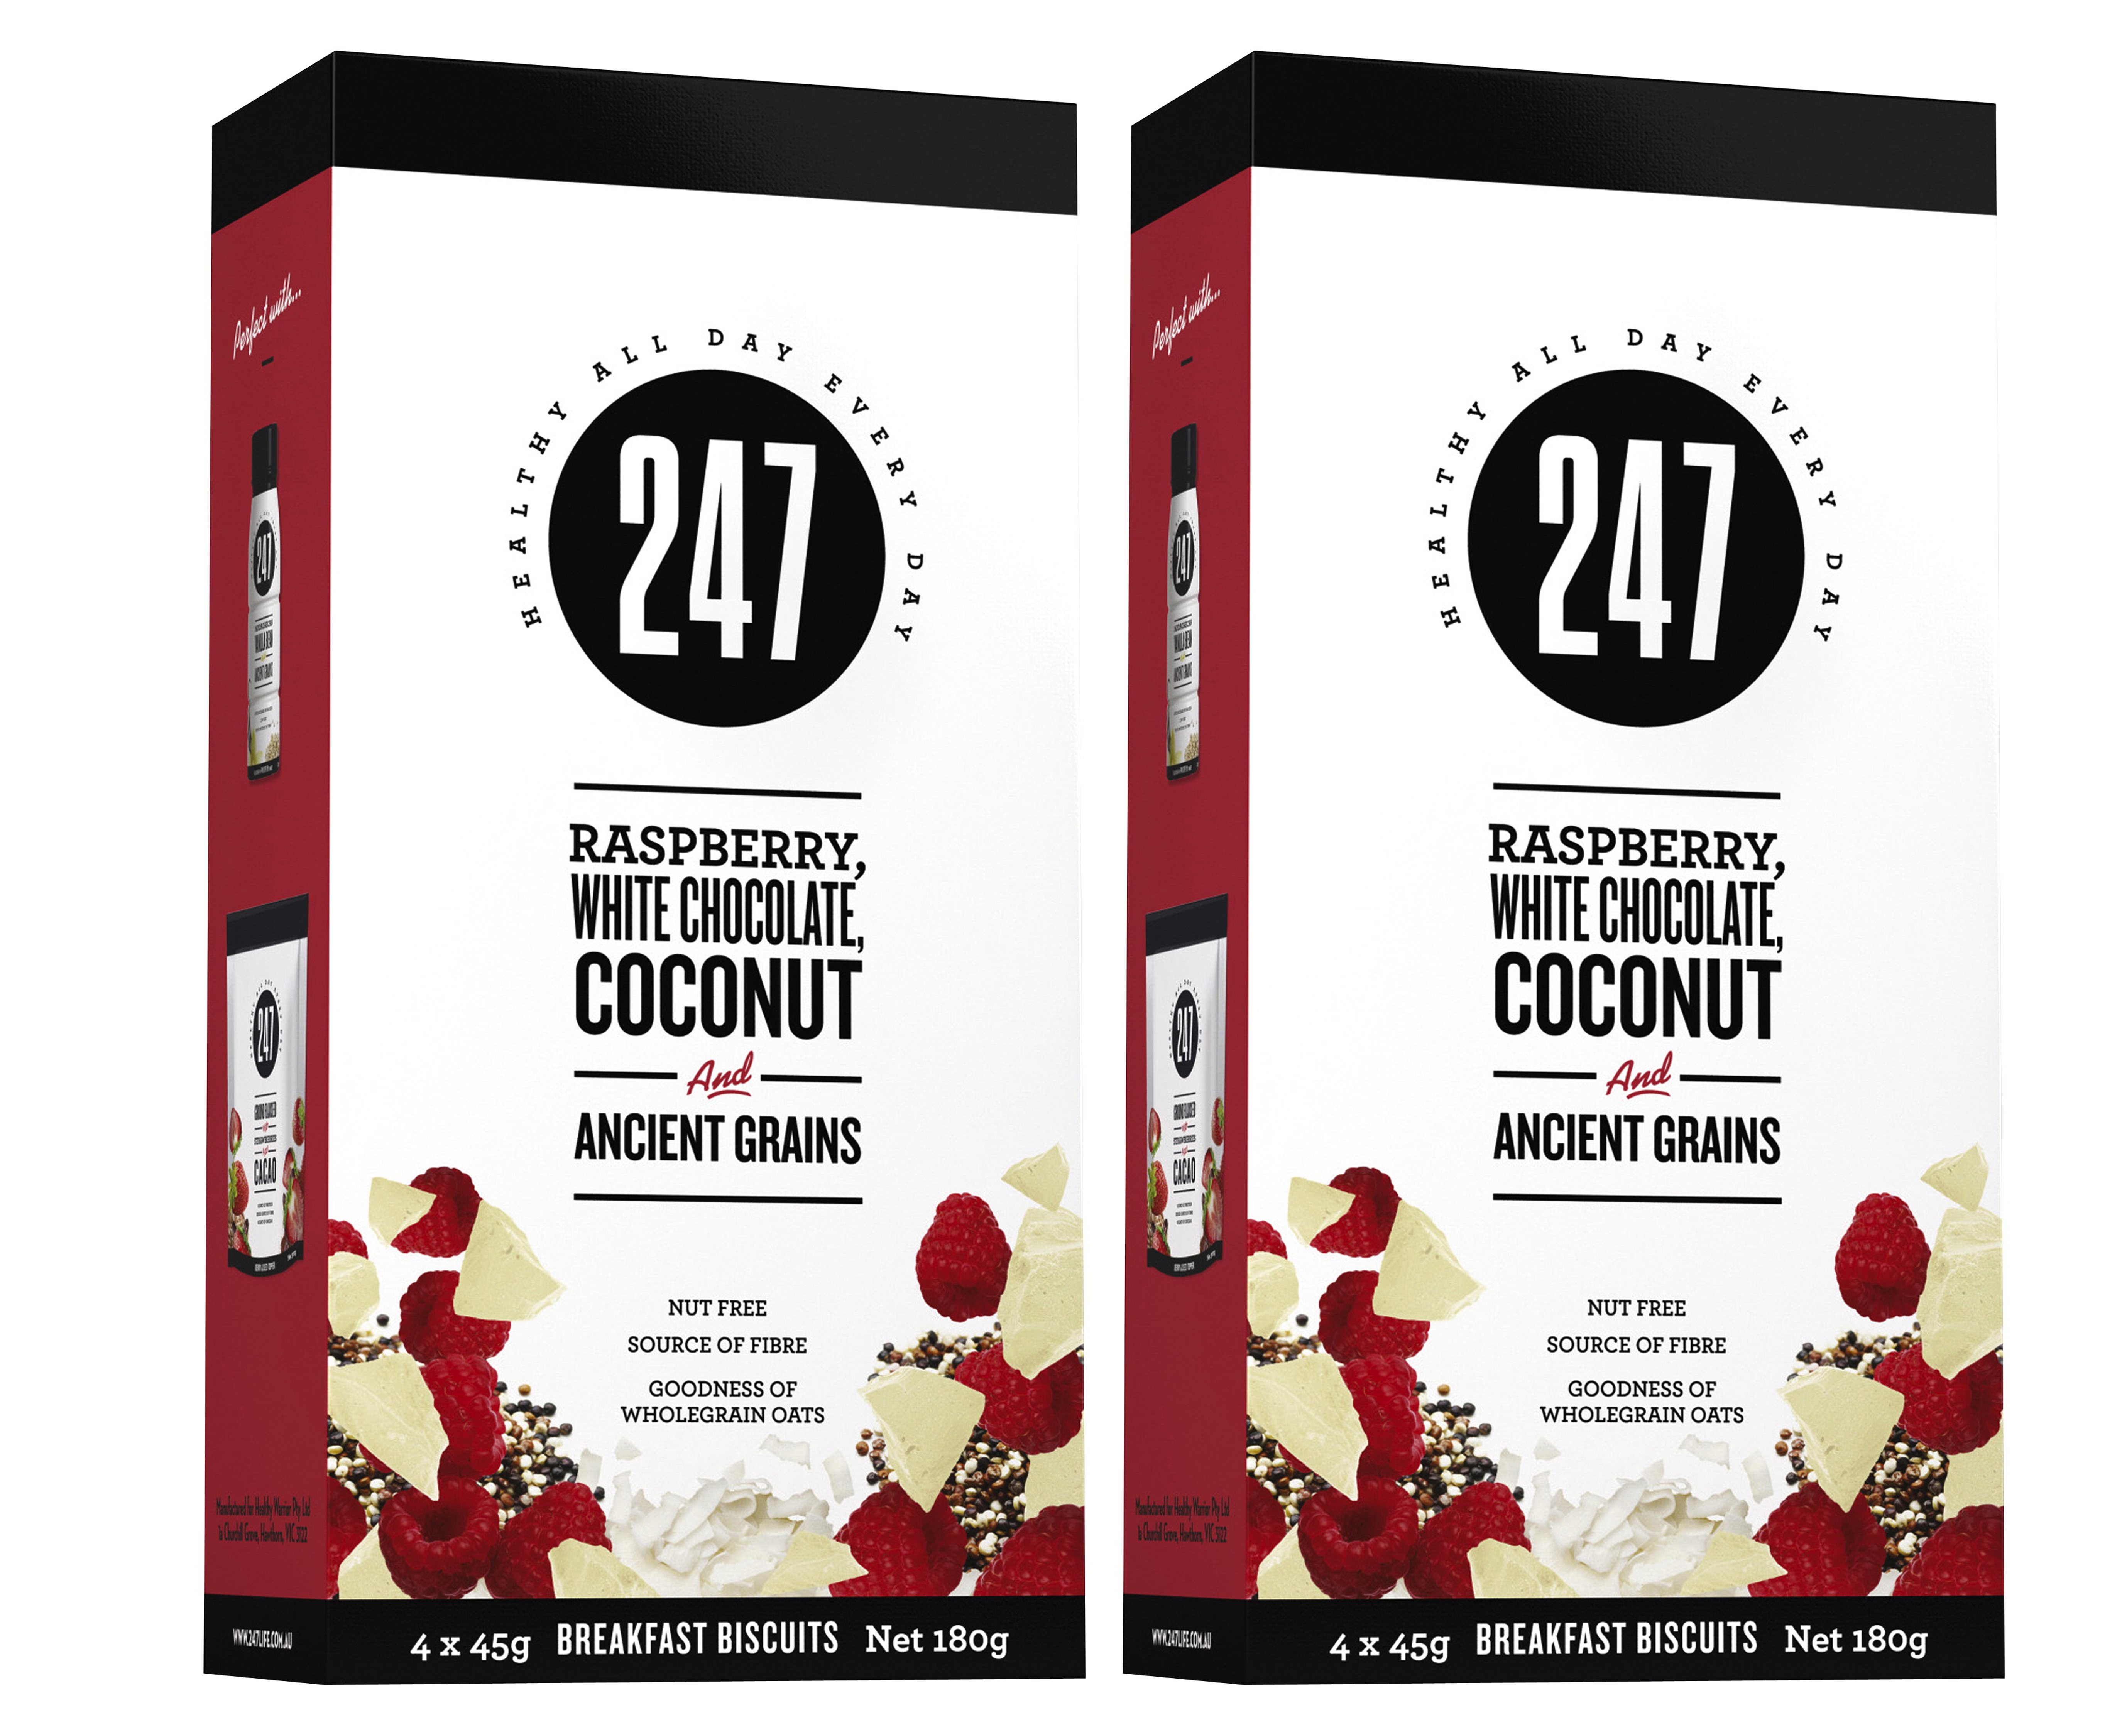 2 x 247 Breakfast Biscuit Raspberry, White Chocolate, Coconut & Ancient Grains 180g